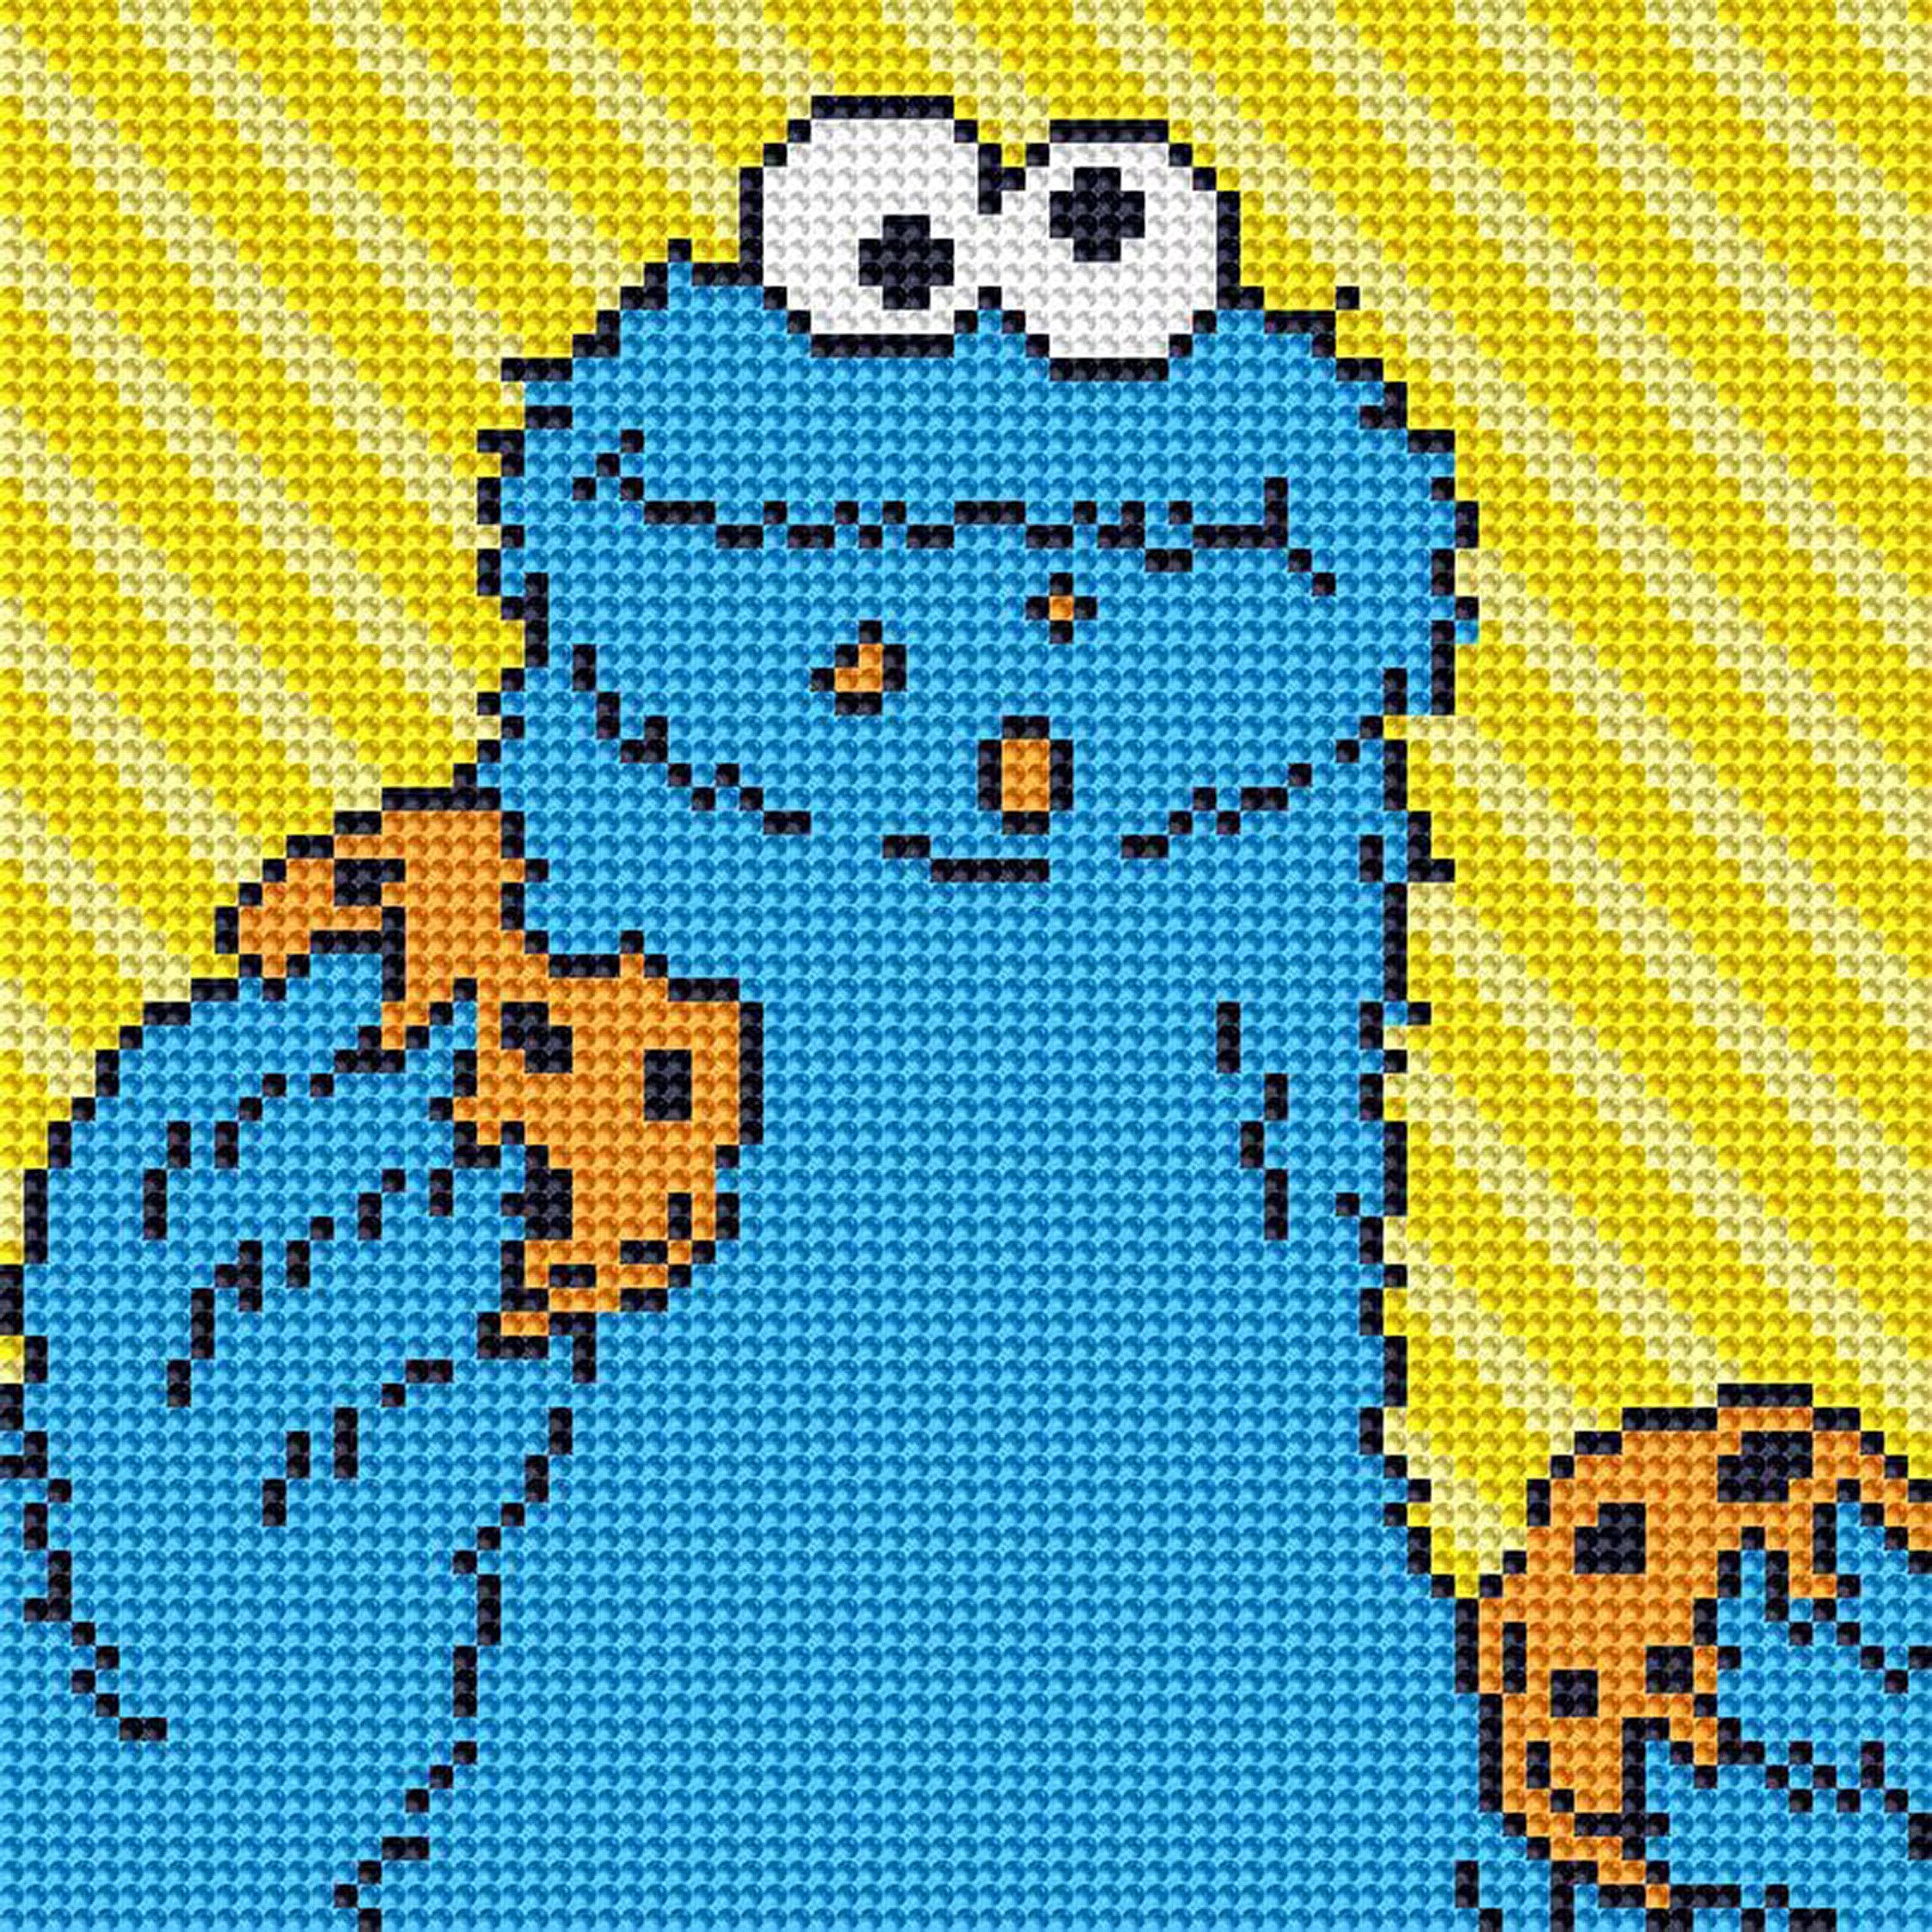 100+] Cookie Monster Wallpapers